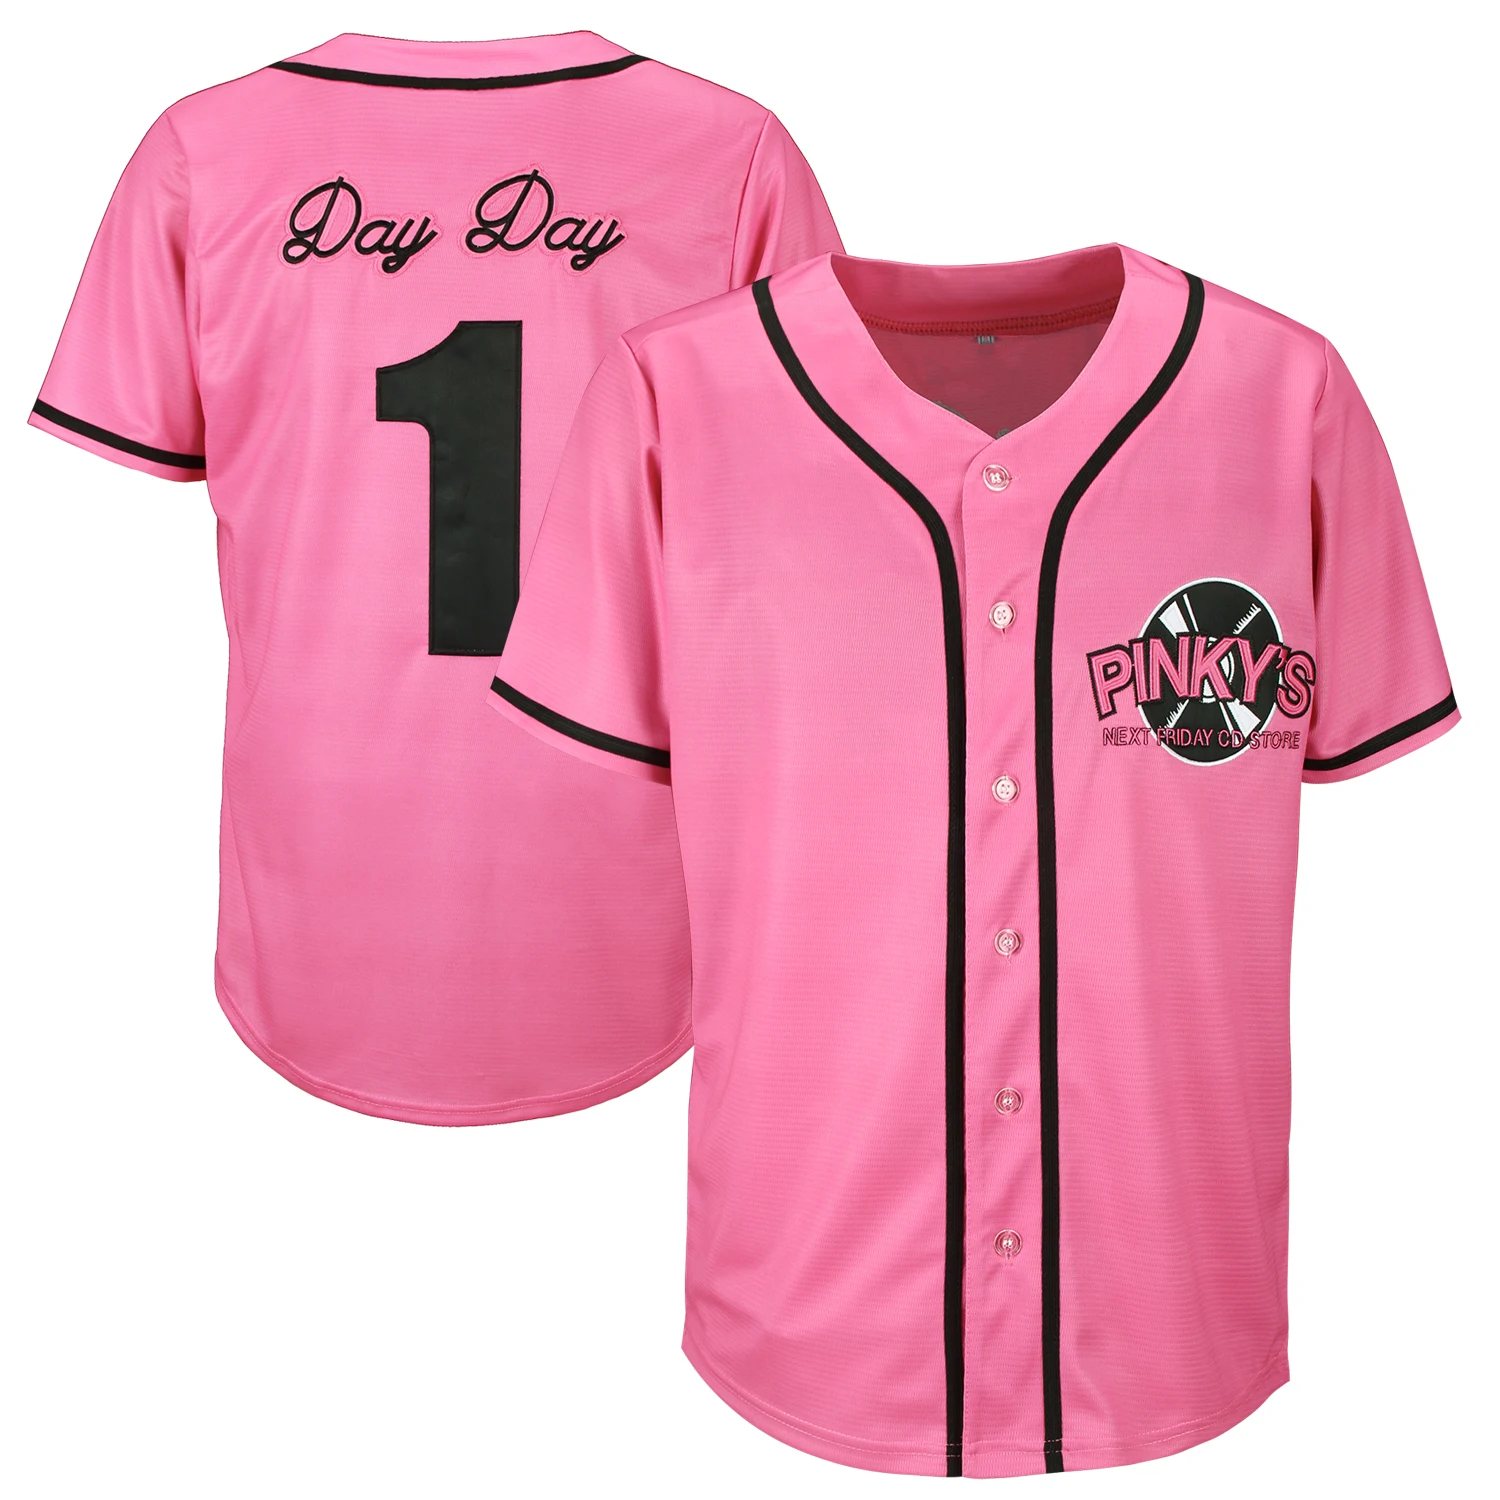 

Pinky's Next Friday CD Store Movie Day Day Jones Baseball Jerseys Hip Hop Fashion Trend Hip-Hop Pink Jersey